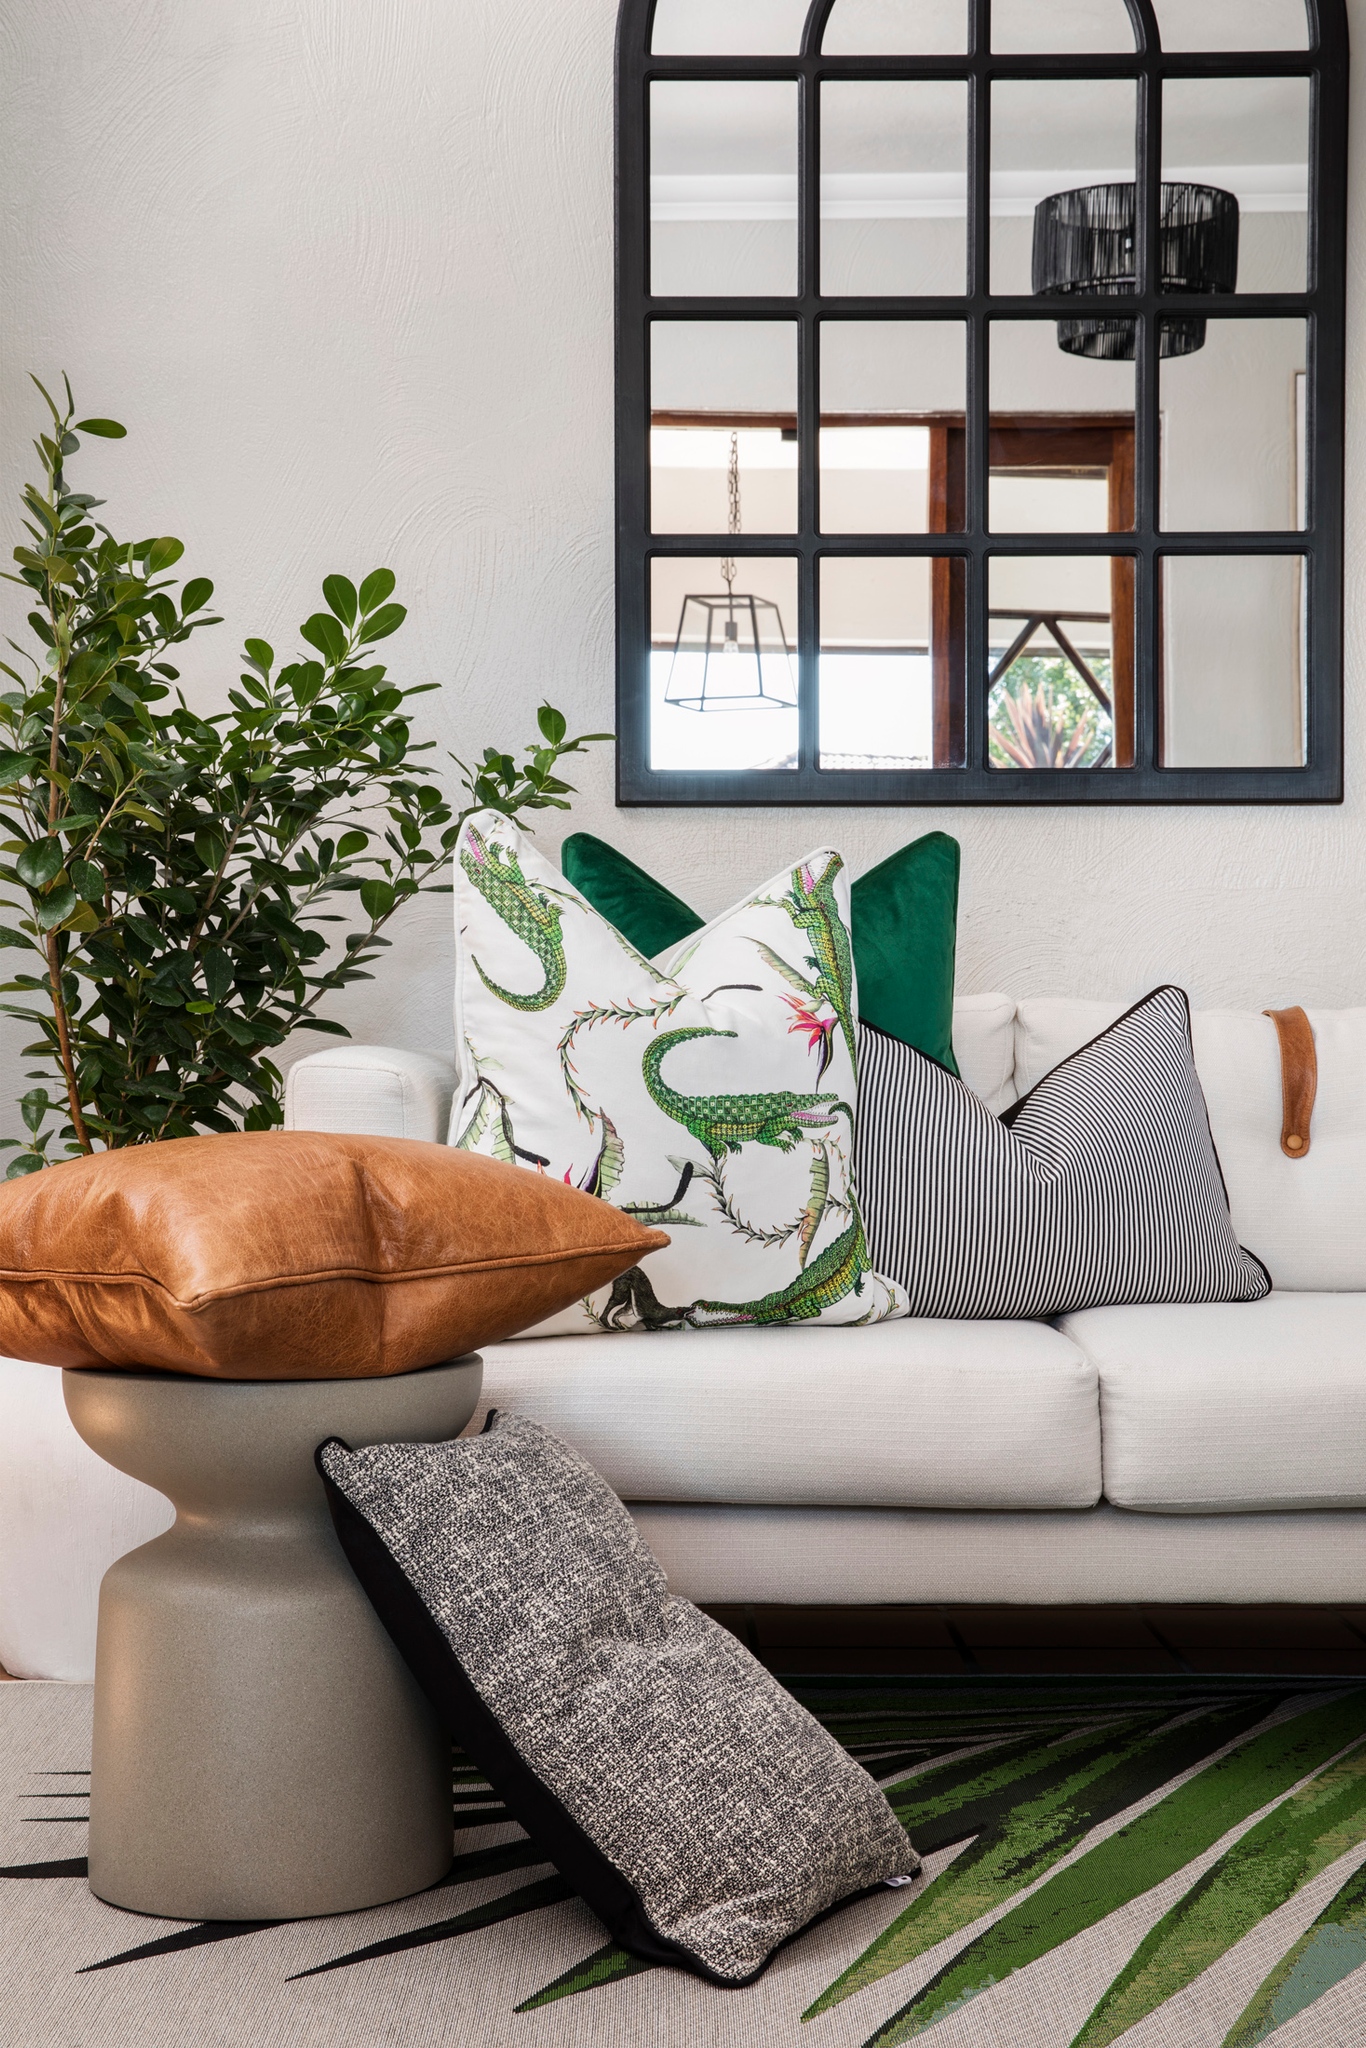 DIYgirls: The Interior Design Company Revolutionizing Southern Africa's Home Decor Scene